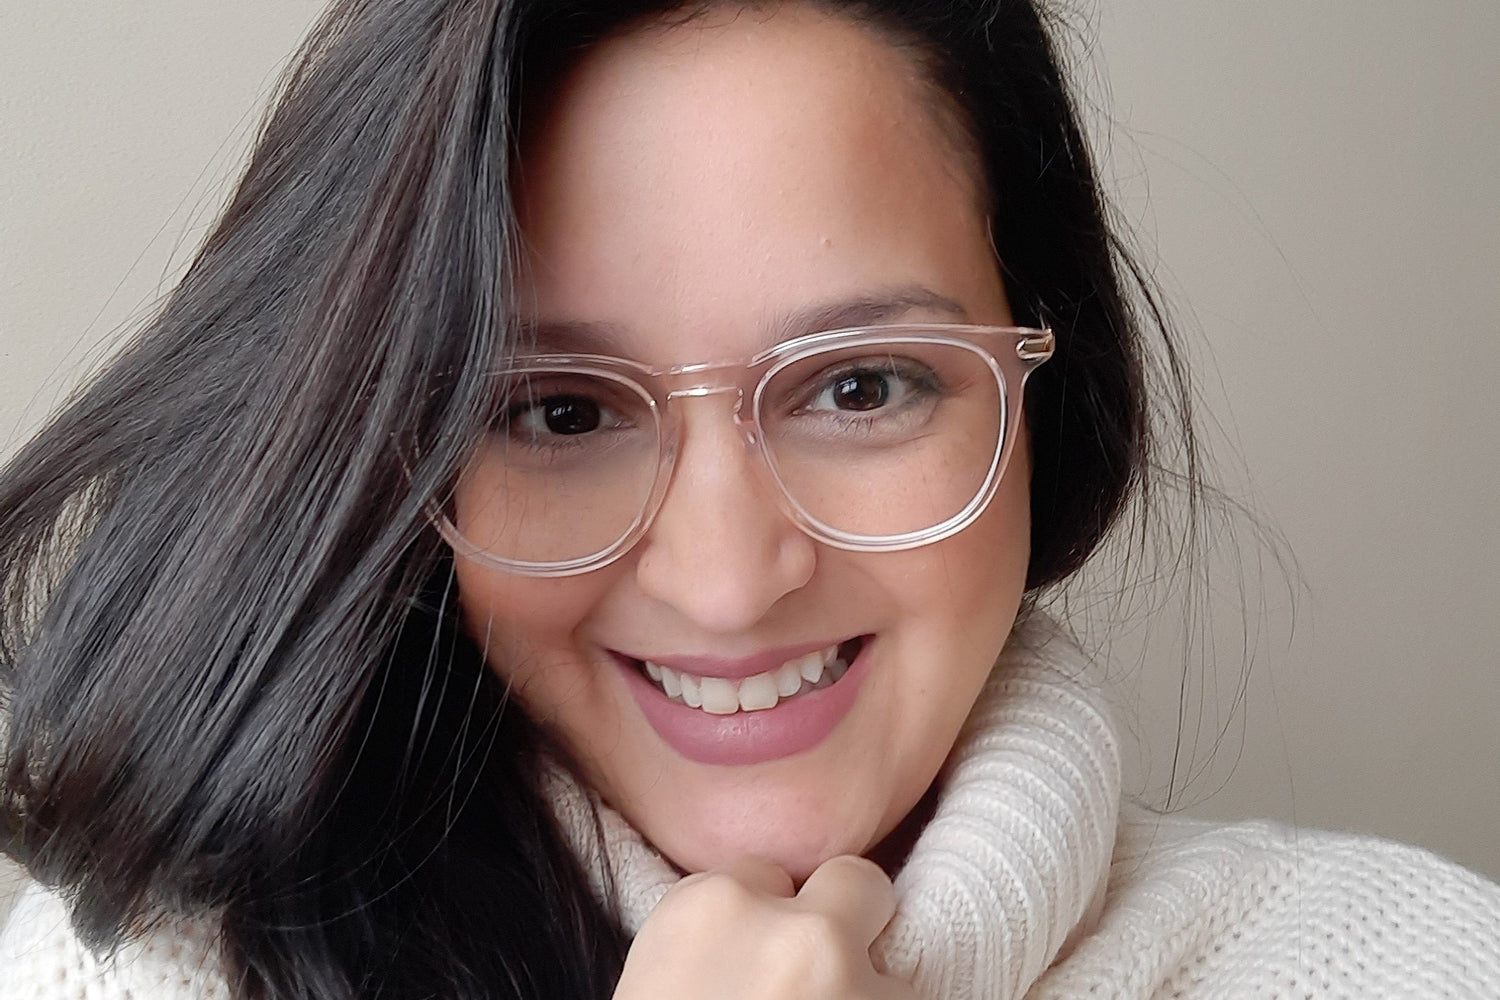 Can I Just Change The Lenses In My Glasses? | KOALAEYE OPTICAL